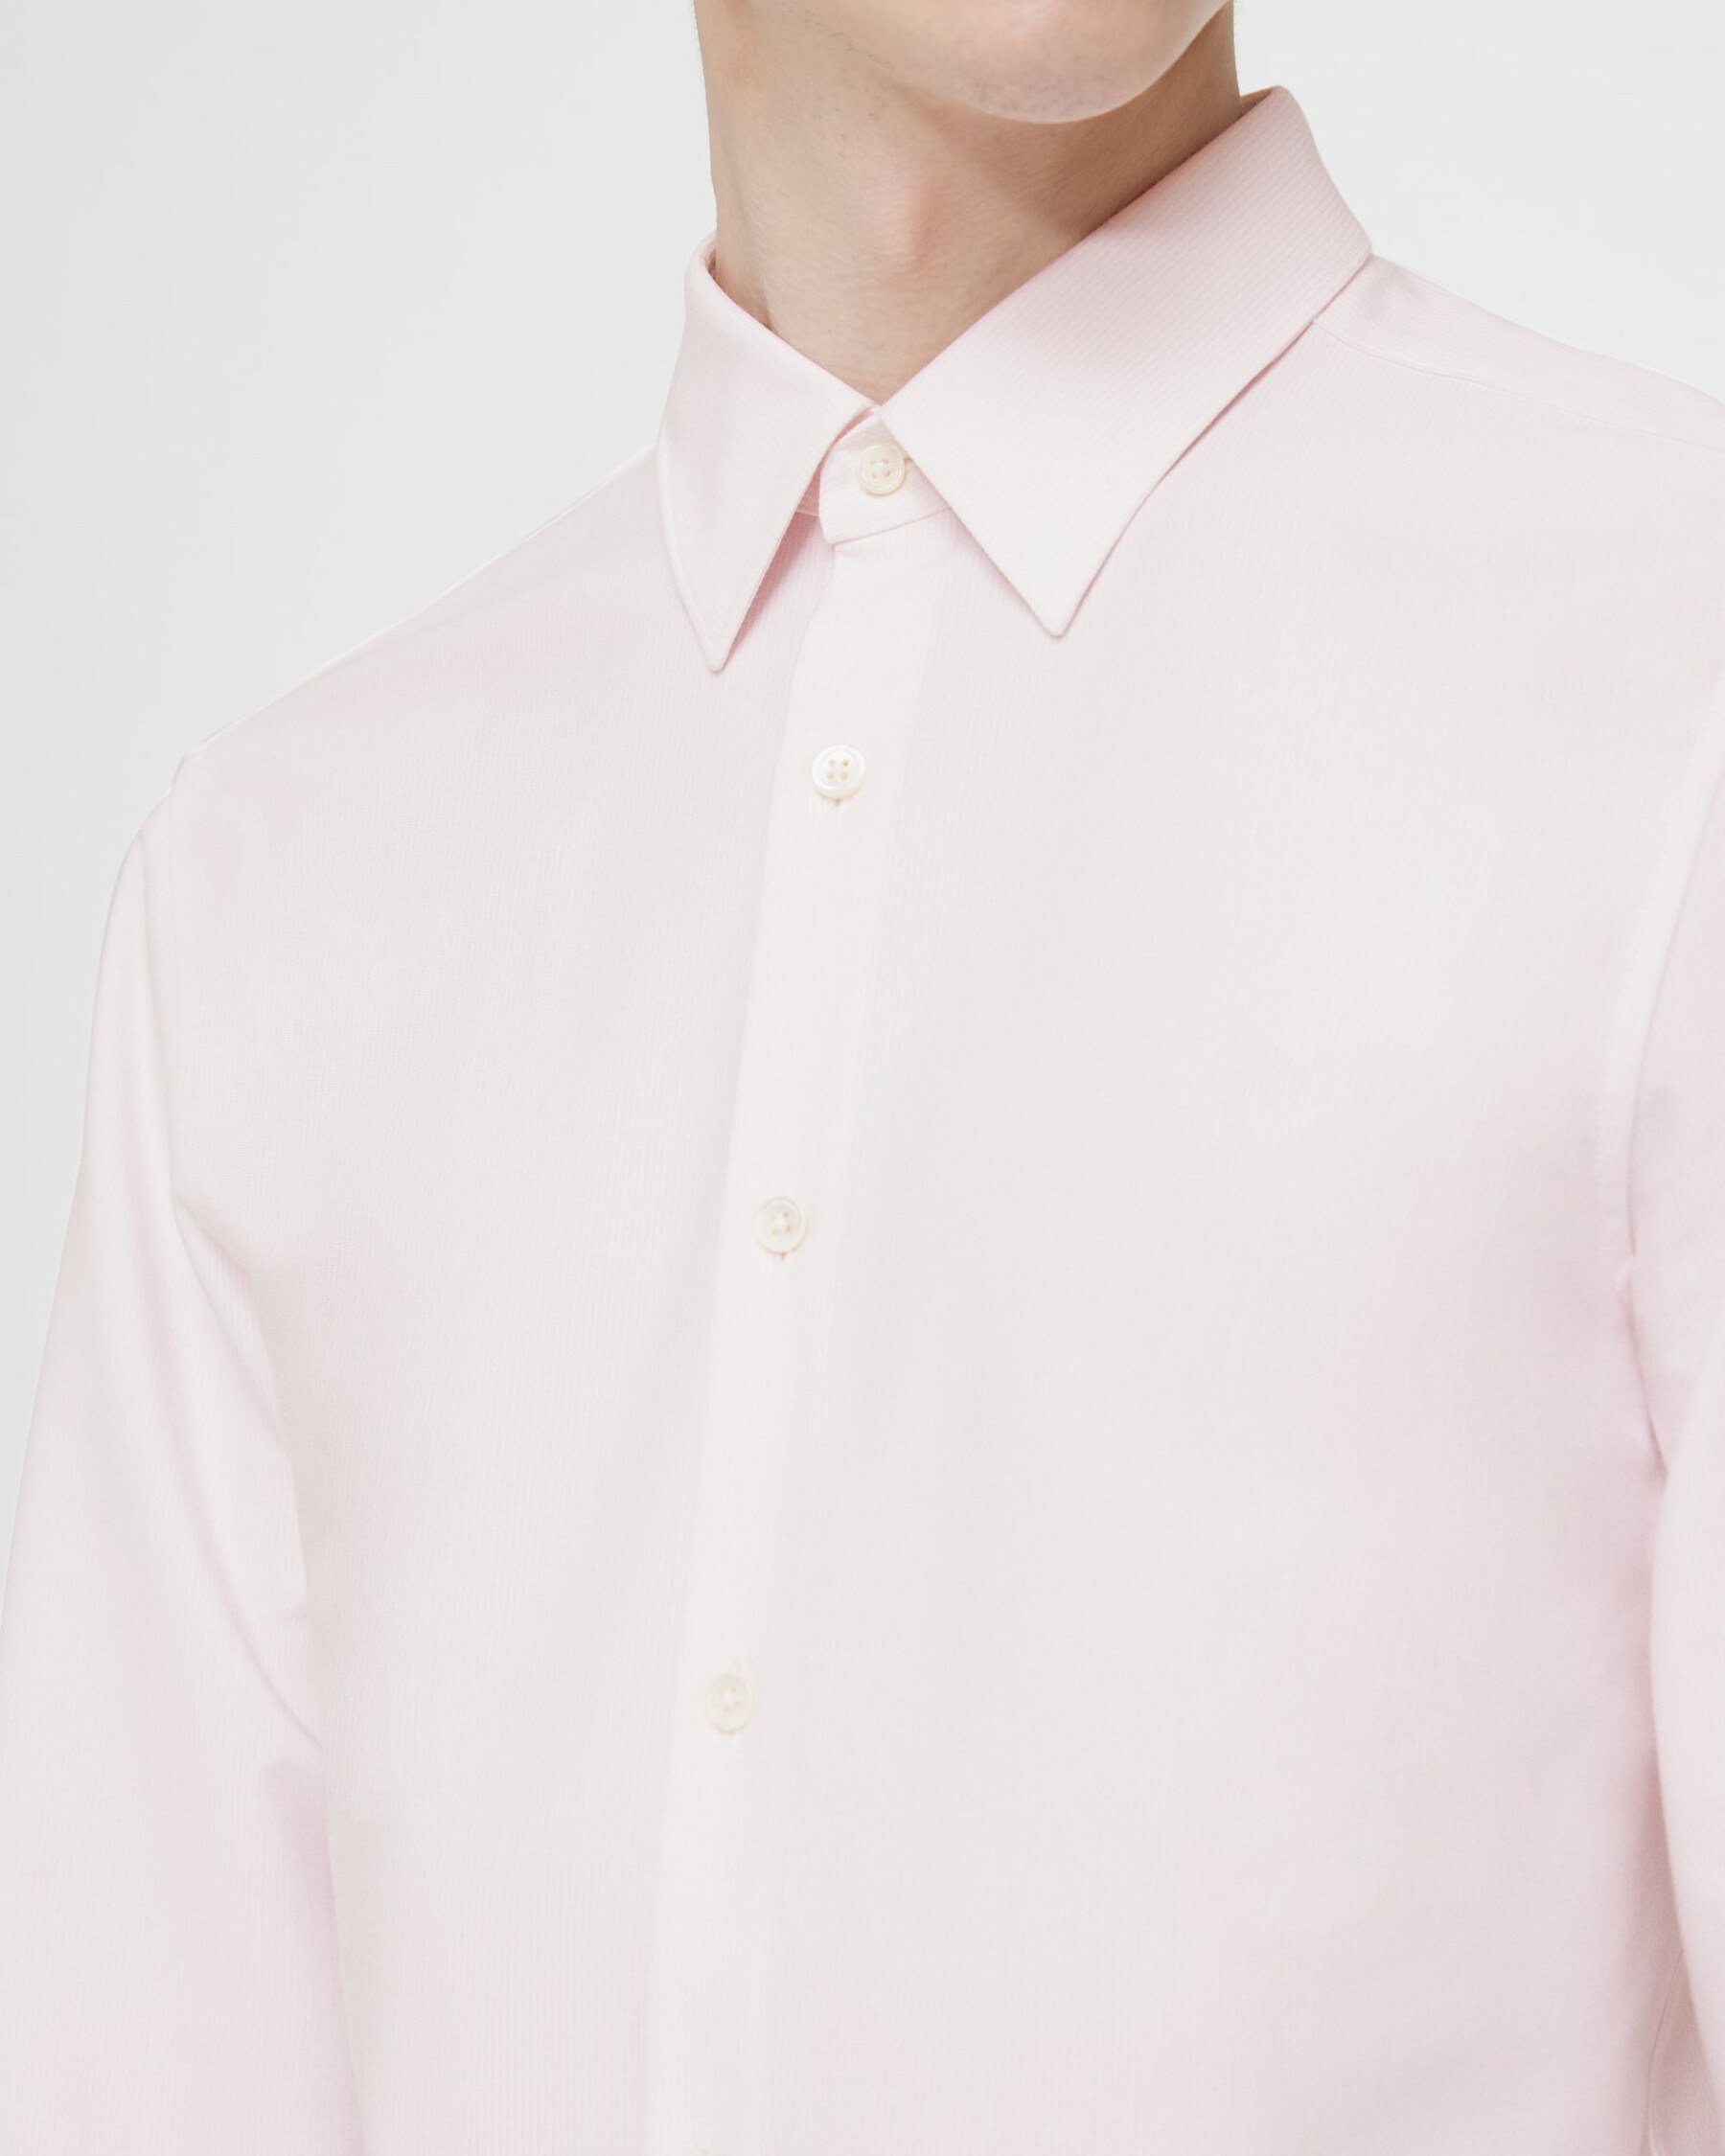 Sylvain Shirt in Striped Cotton Blend